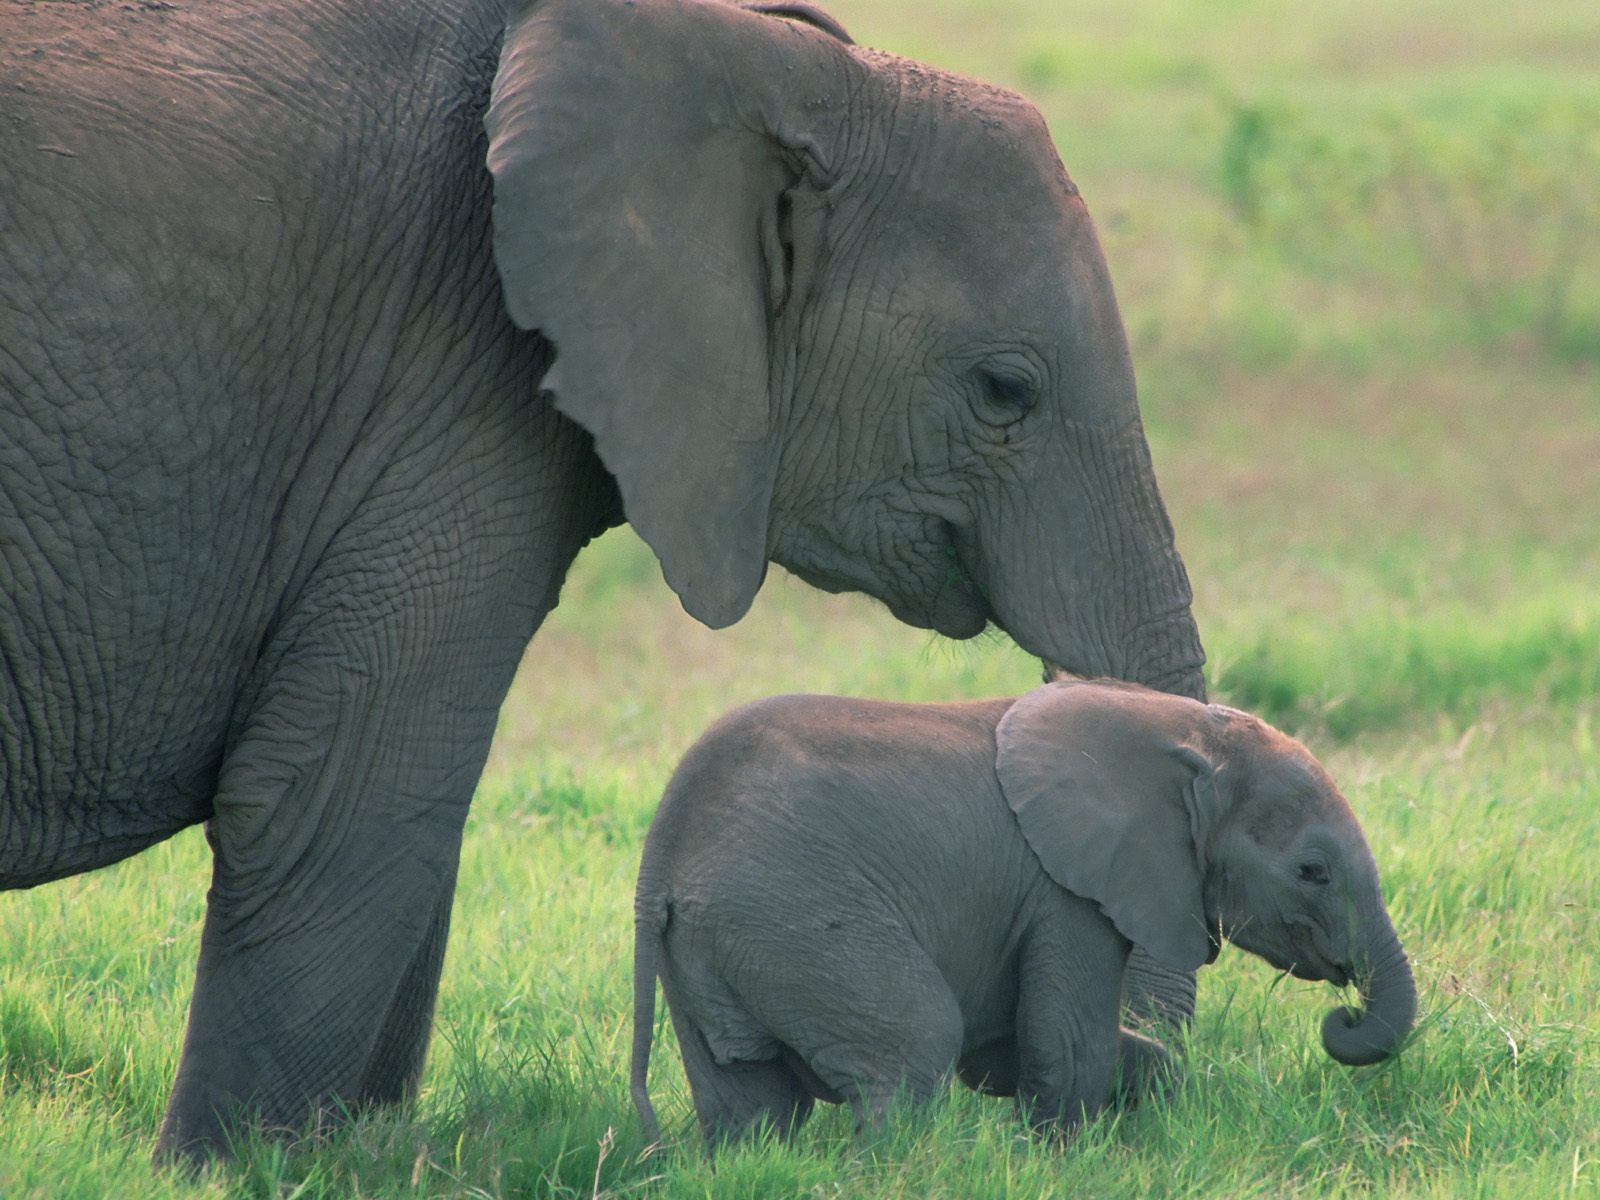 https://blogger.googleusercontent.com/img/b/R29vZ2xl/AVvXsEhQGiyovoAu7qVk1Ui-unZgrQ_cEFyg_WzZUCouOsFbFuntBlZ5jr5bp3jl4ZMuG0EvTANwtgMabAx2LEE0Rh7NlBs9PHs8YgAjrjD3QyRVGDCcX3Yxslwrre6Mgc4AQnw1aTxIzJcQ0jQ/s1600/cute-little-african-baby-elephant-with-his-mother-pictures-wallpapers.jpg